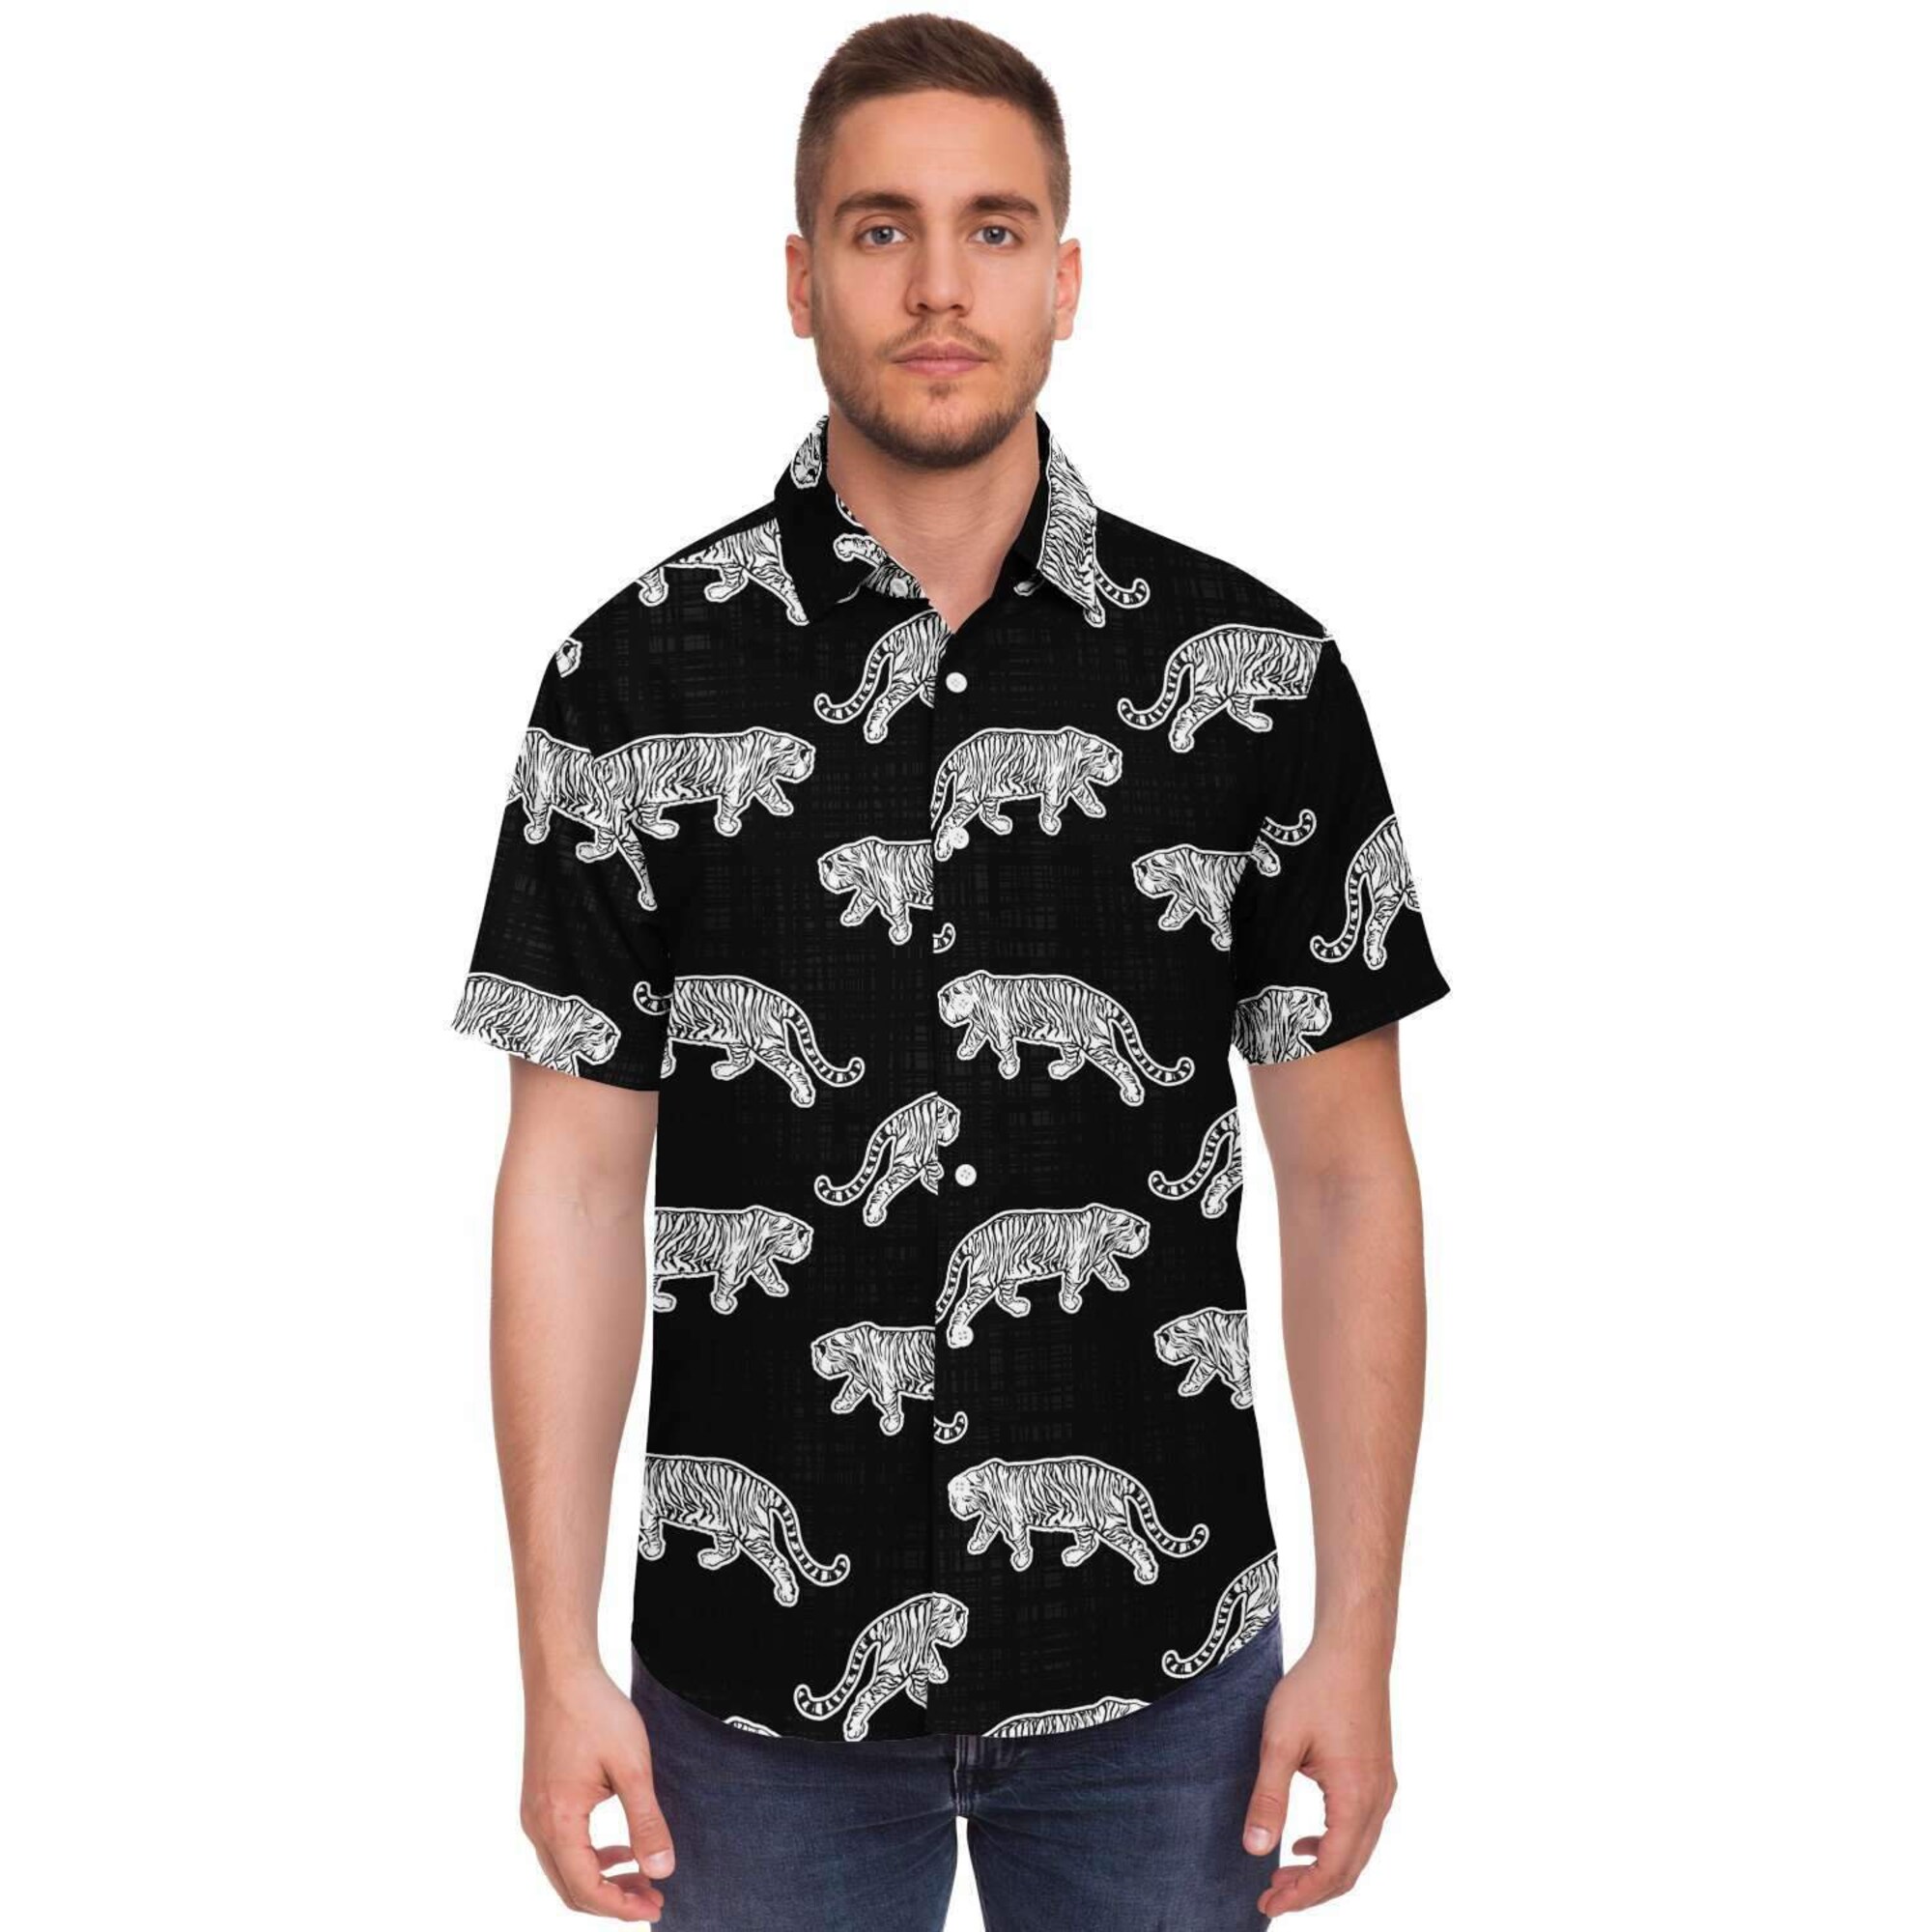 Discover Tiger Print Men's Shirt, Cheetah Print Hawaiian Shirt